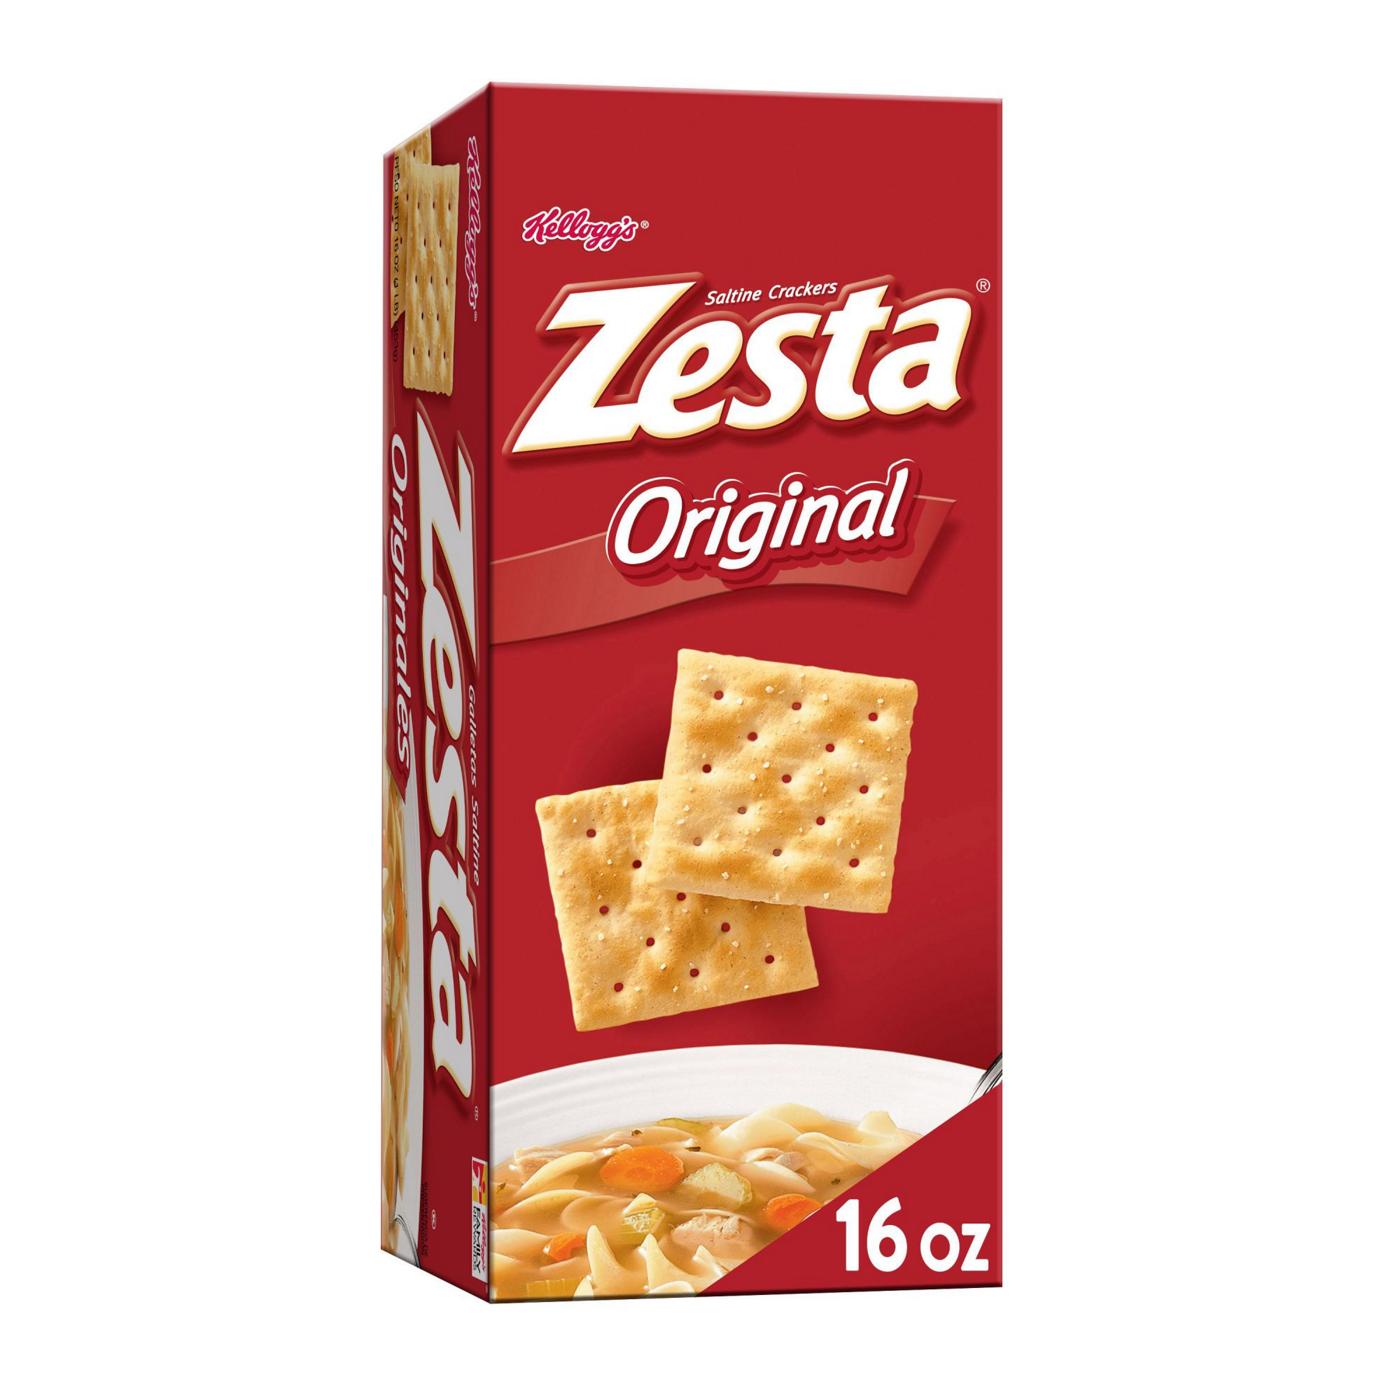 Kellogg's Zesta Original Saltine Crackers; image 5 of 5